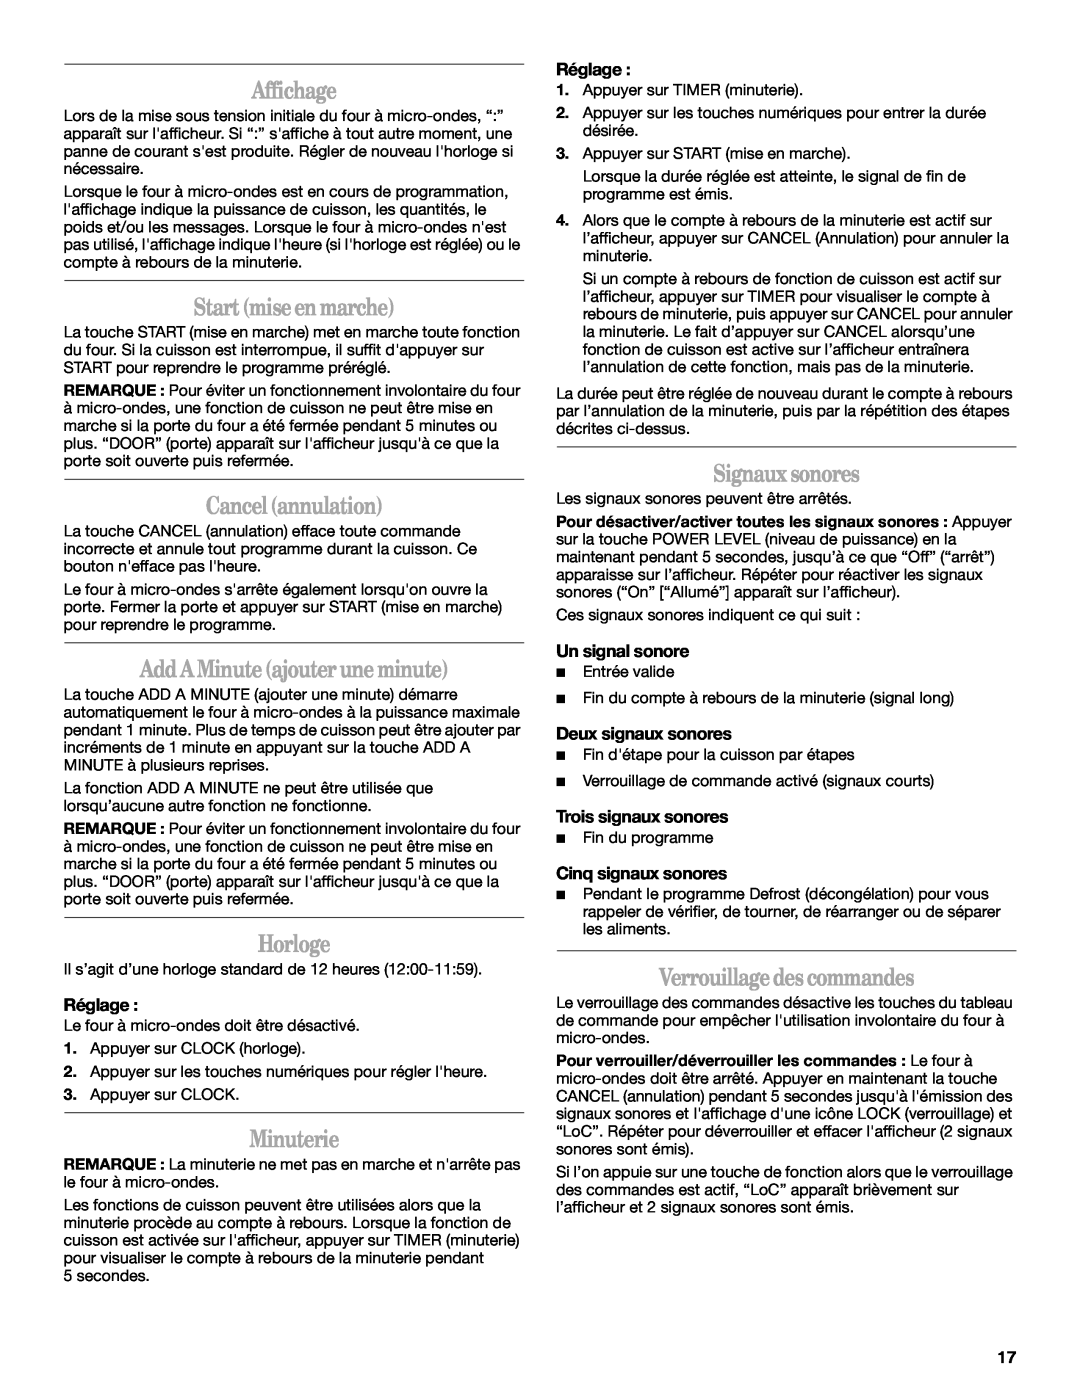 Whirlpool WMC1070 manual Affichage, Startmiseenmarche, Cancelannulation, AddAMinuteajouteruneminute, Horloge, Minuterie 